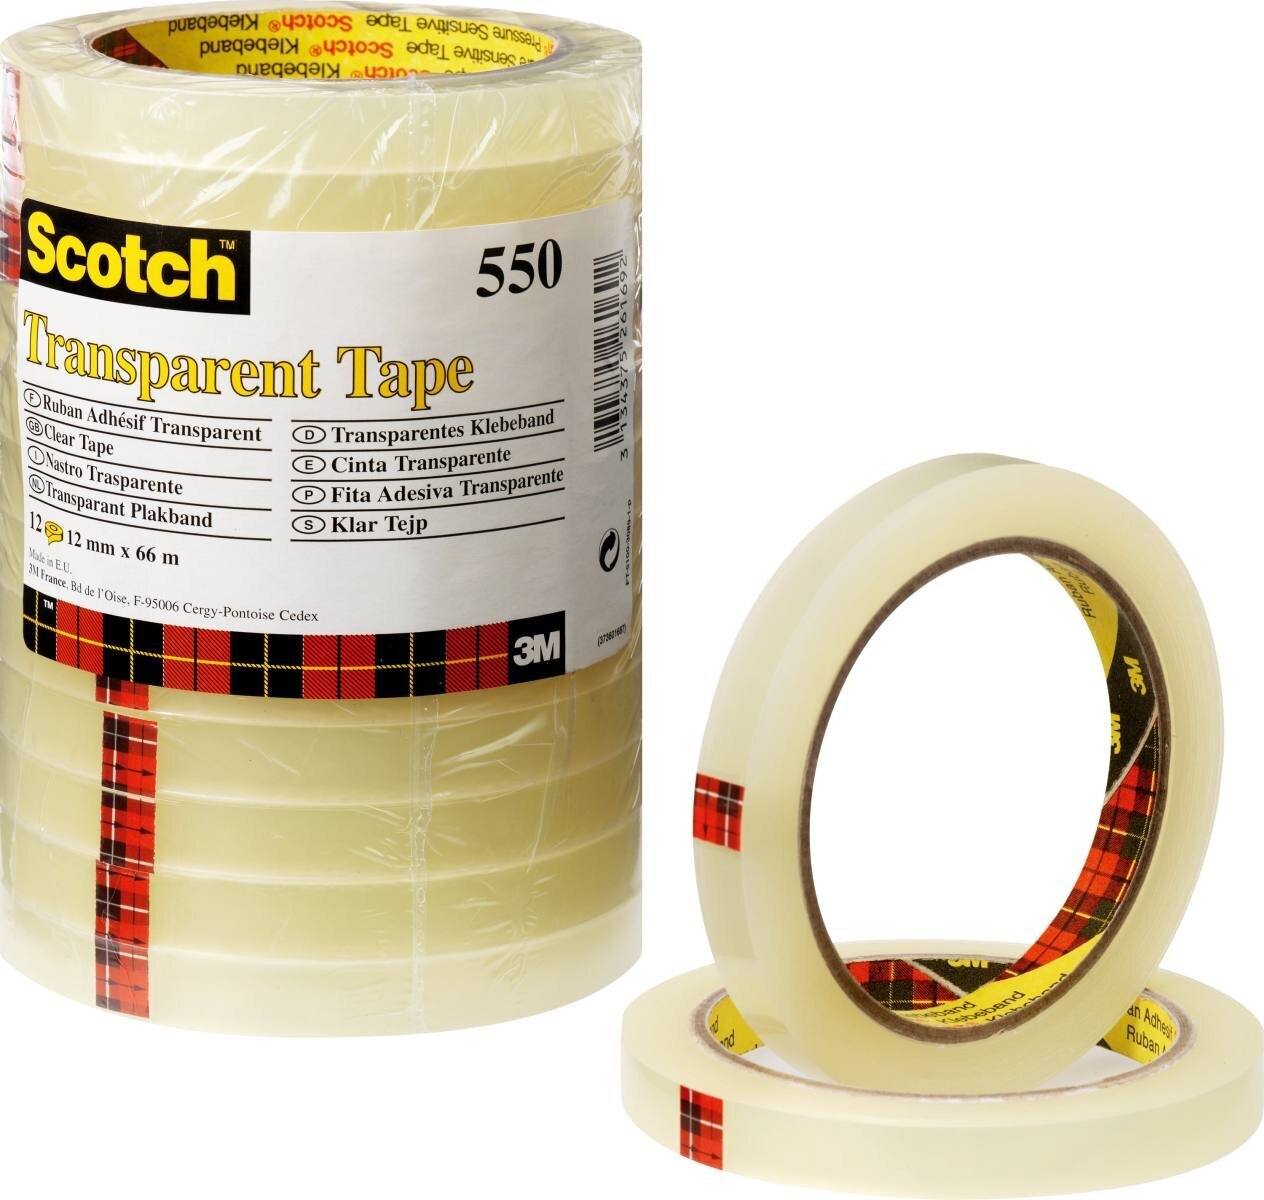 3M Scotch transparant plakband 550, 19 mm x 66 m, transparant, pak van 8 rollen